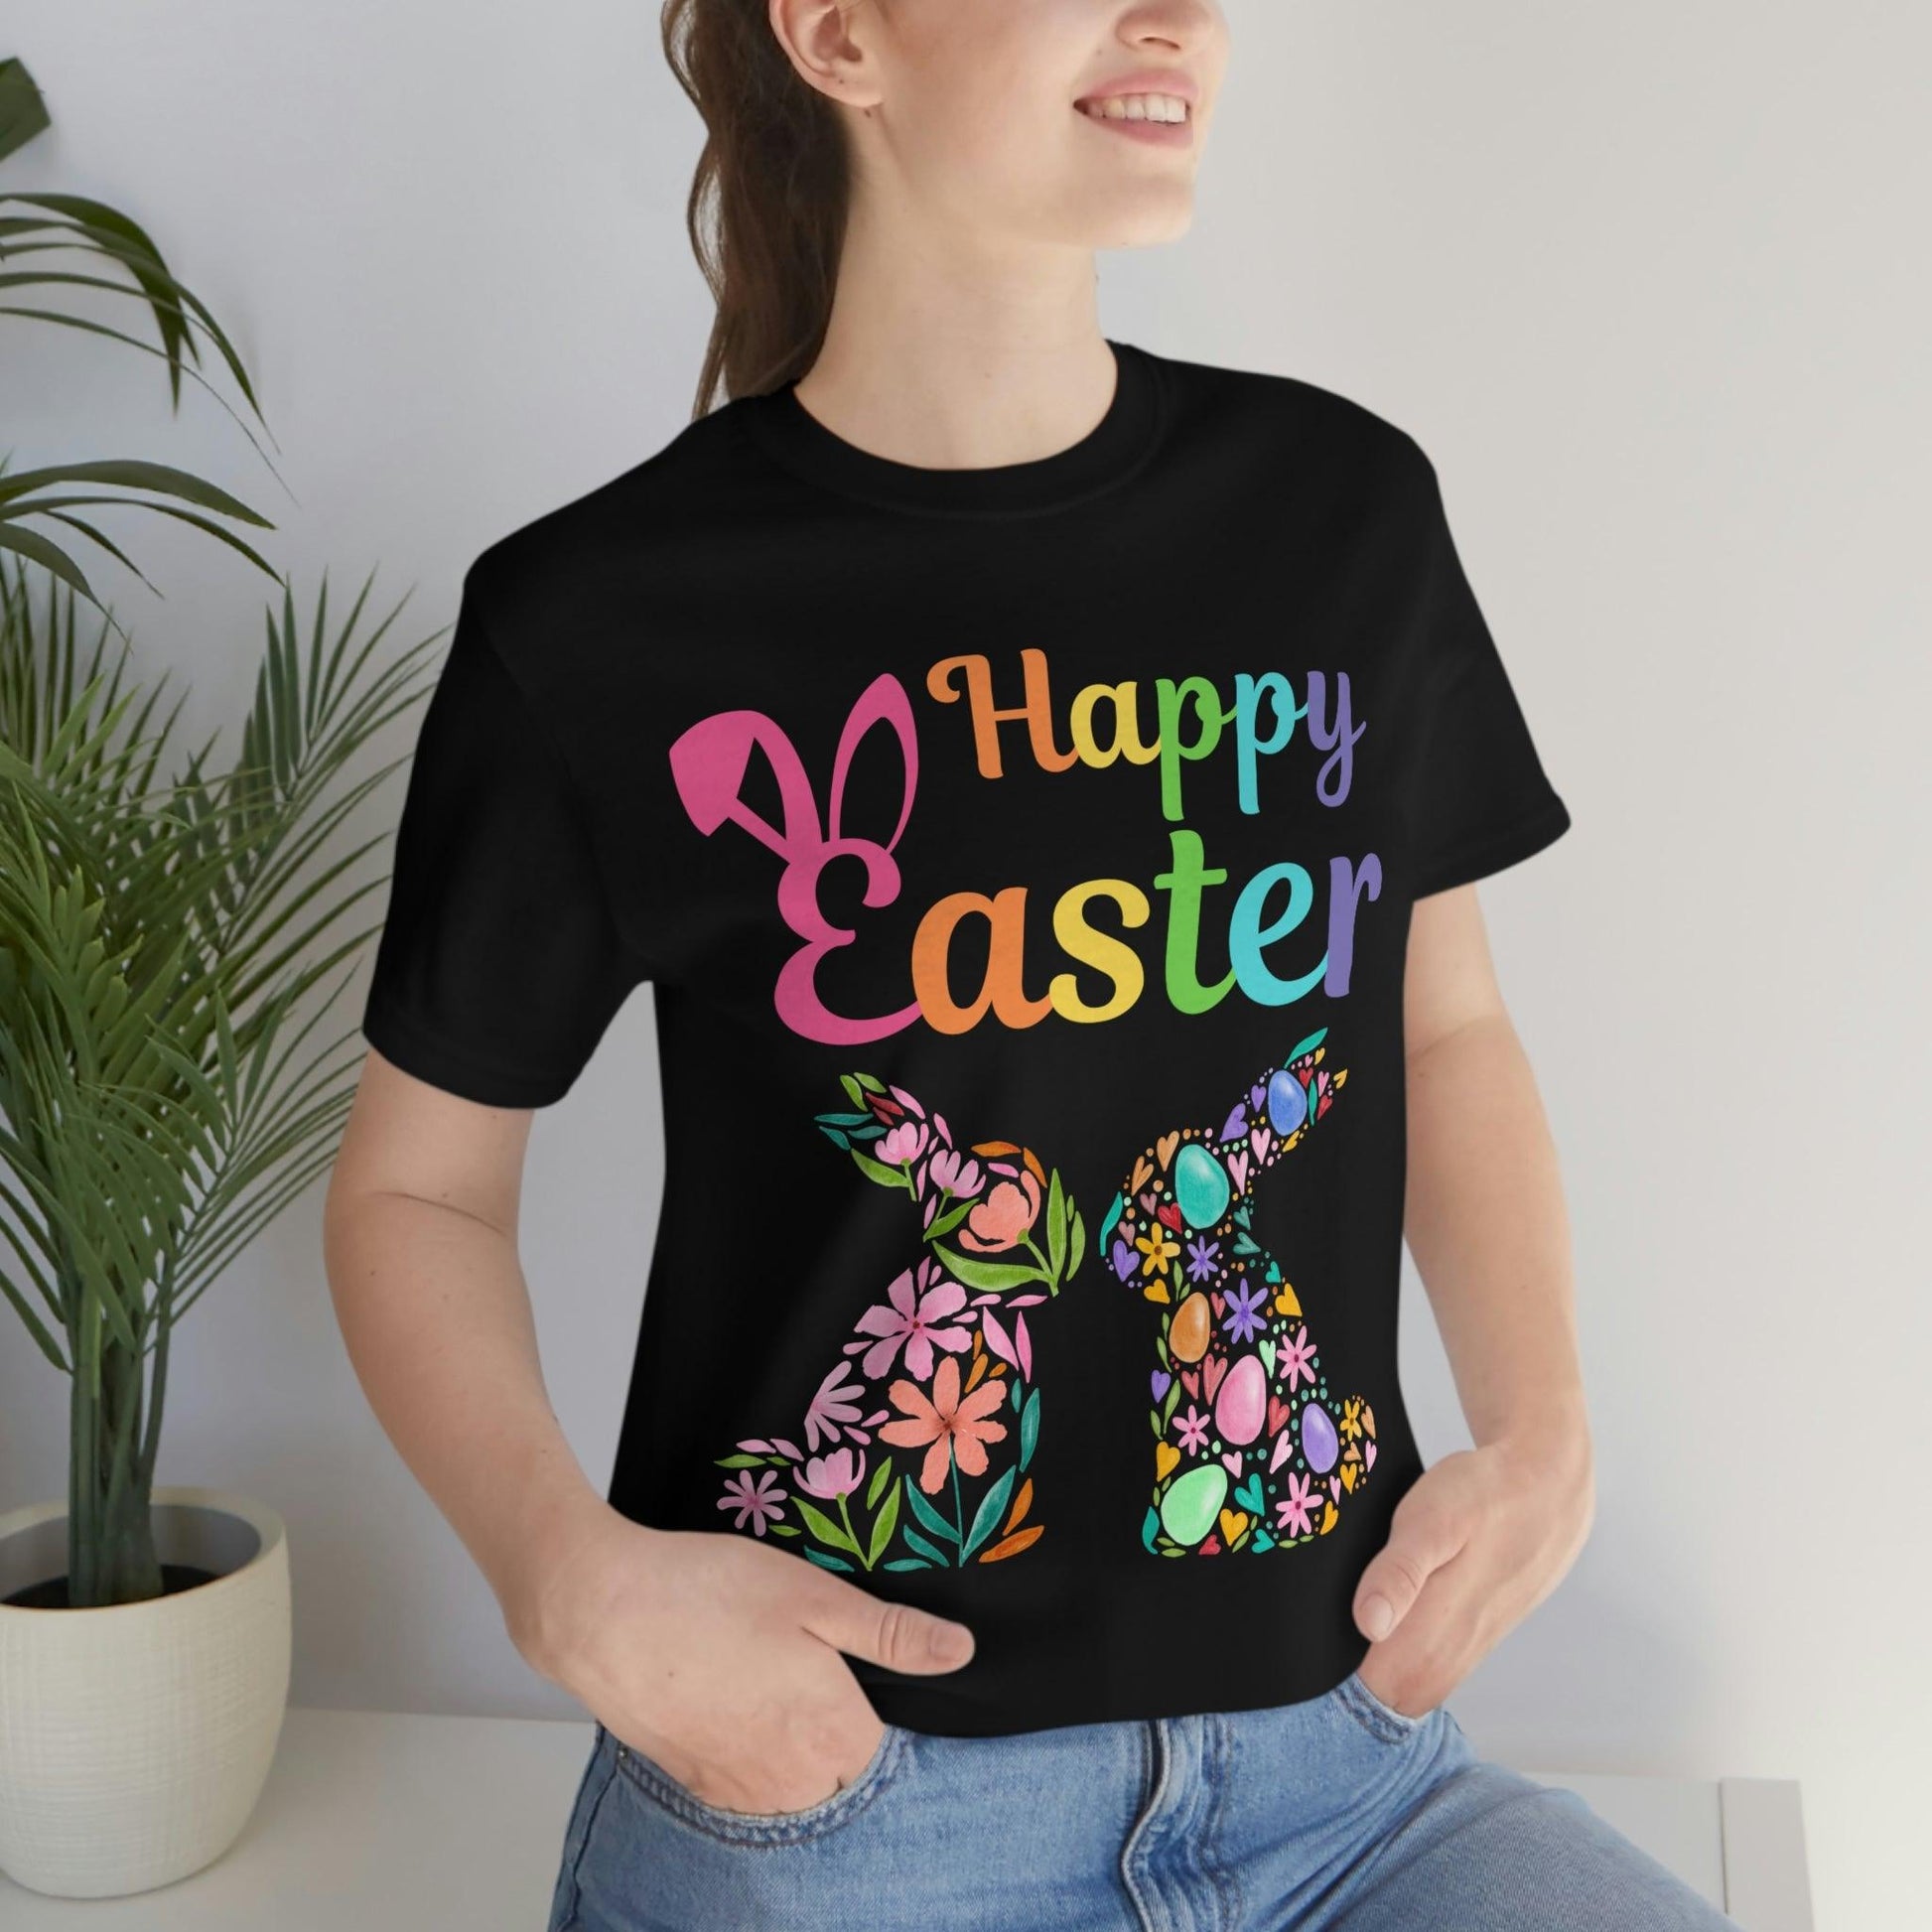 Happy Easter Shirt Easter Gift for women and Men - Shamrock Shirt Irish Shirt - Giftsmojo